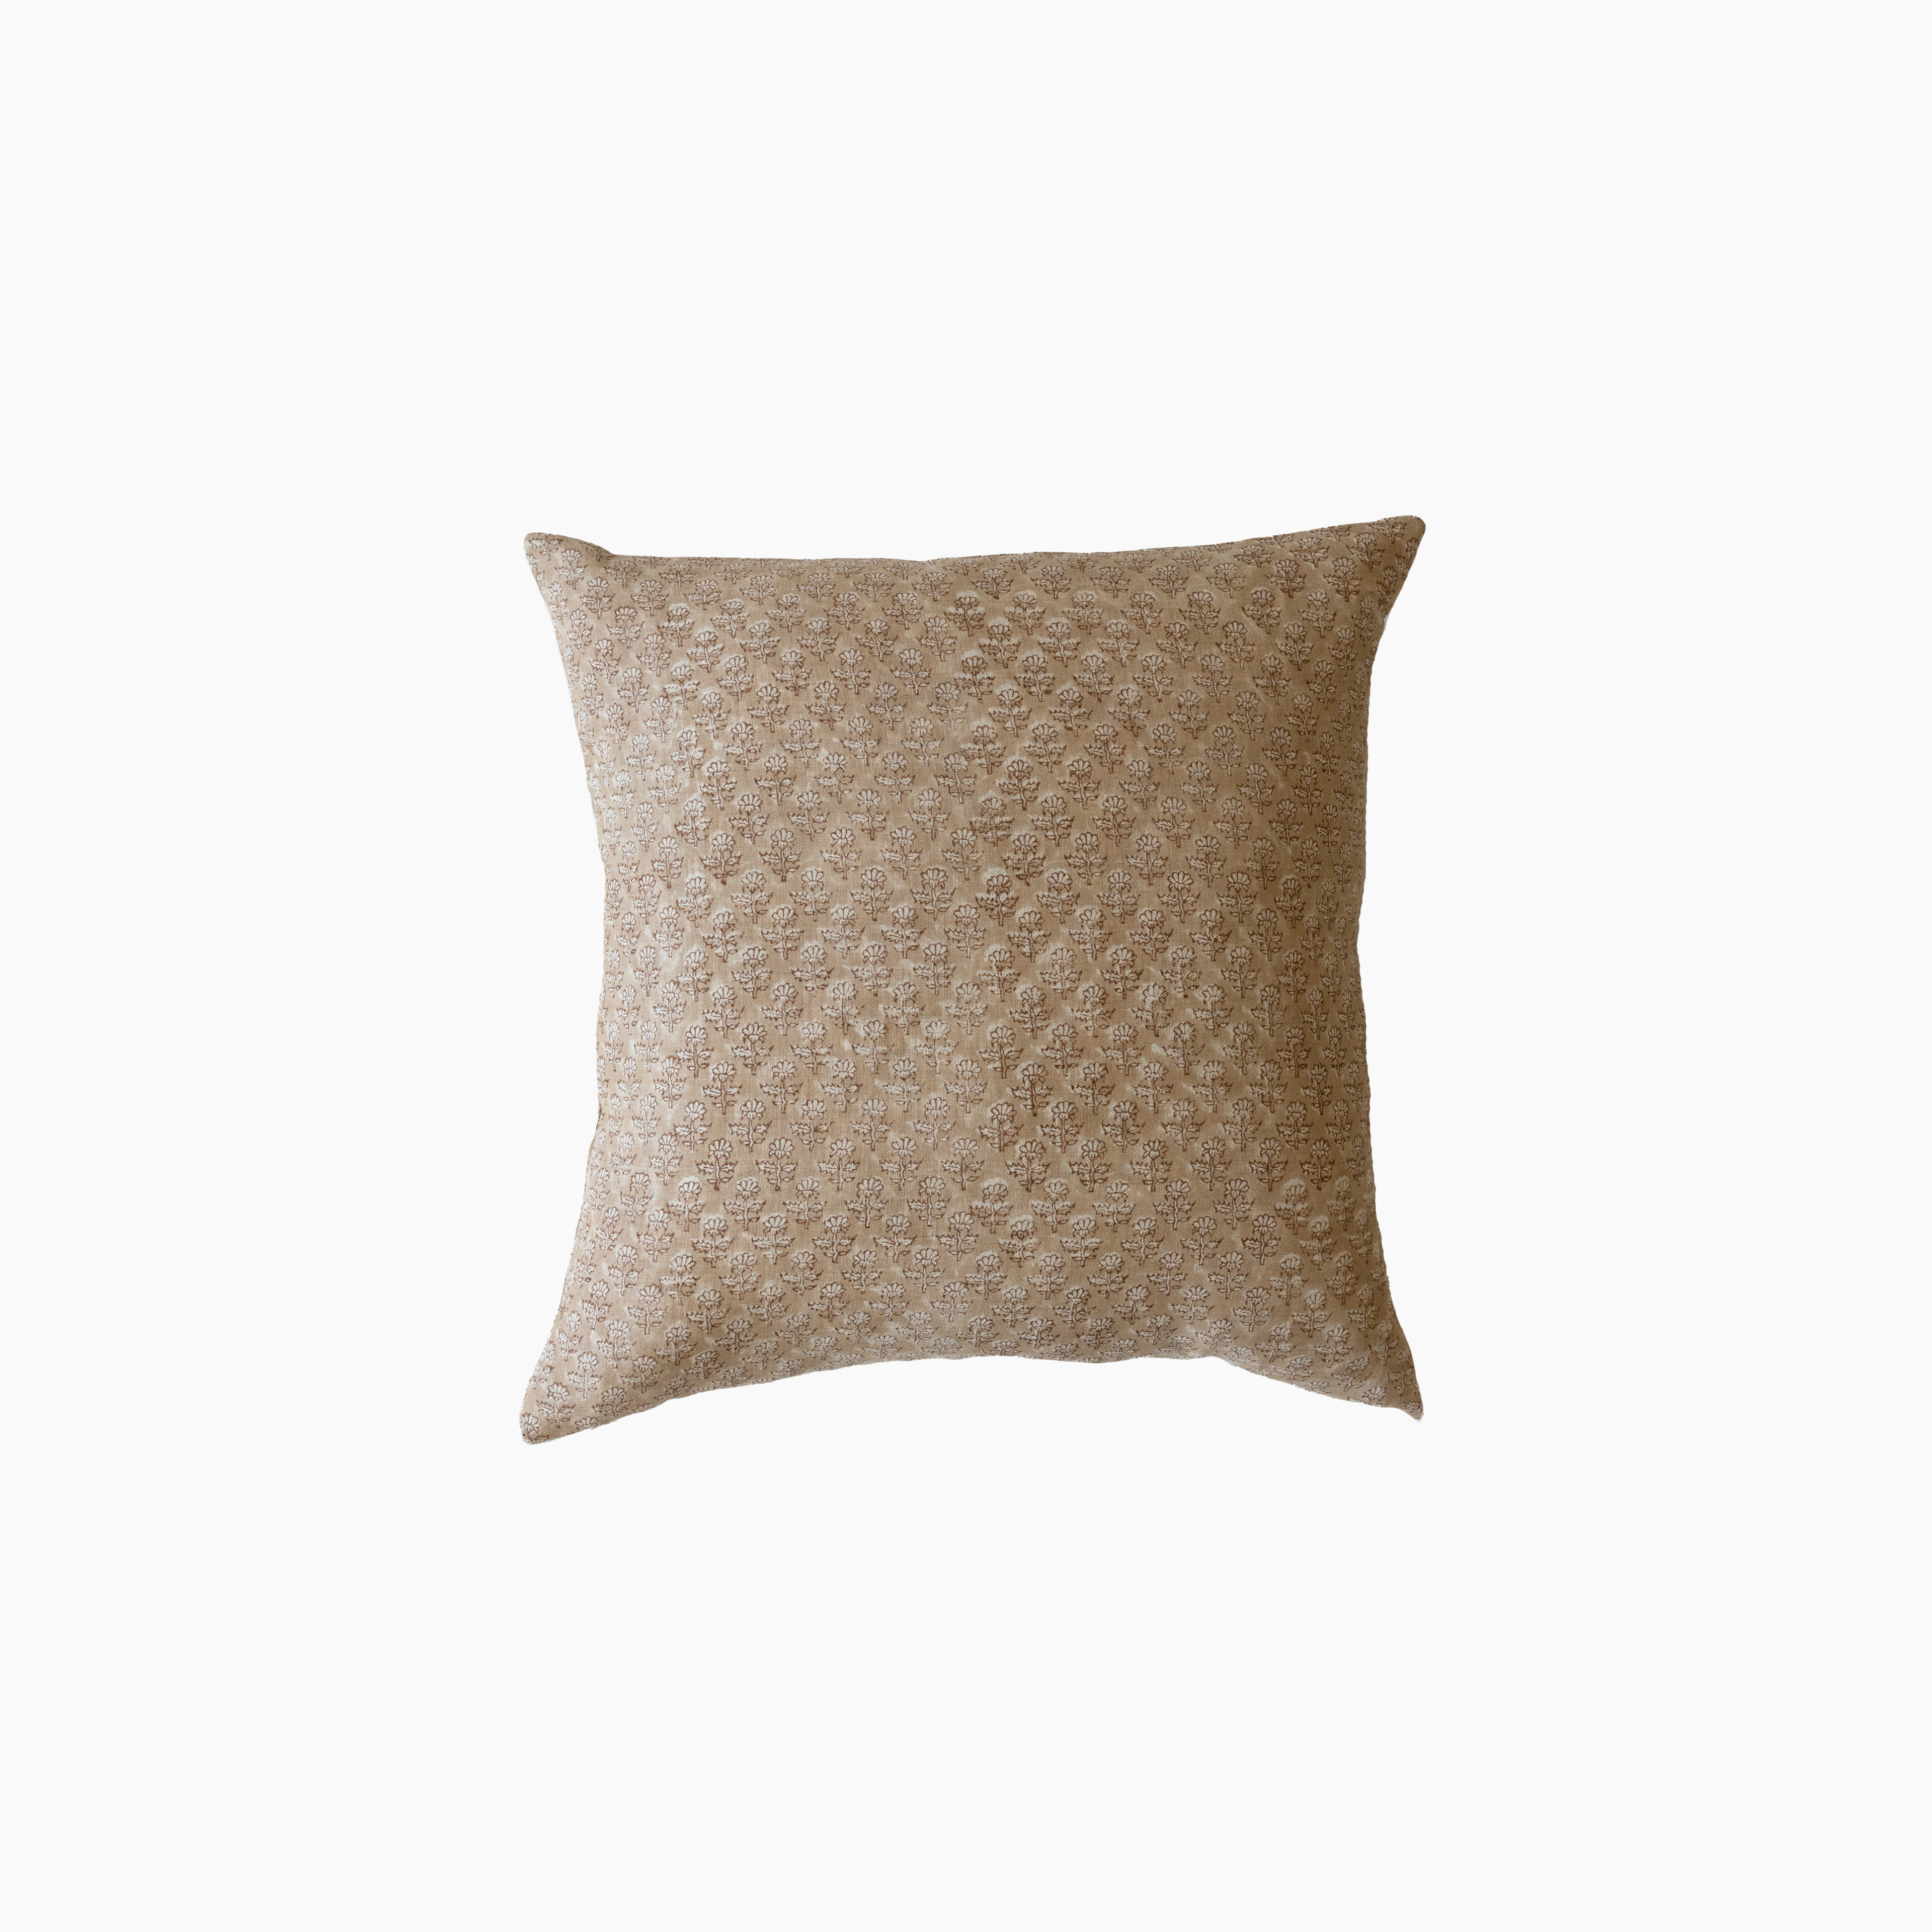 MARJORIE Hand-Blocked Pillow Cover